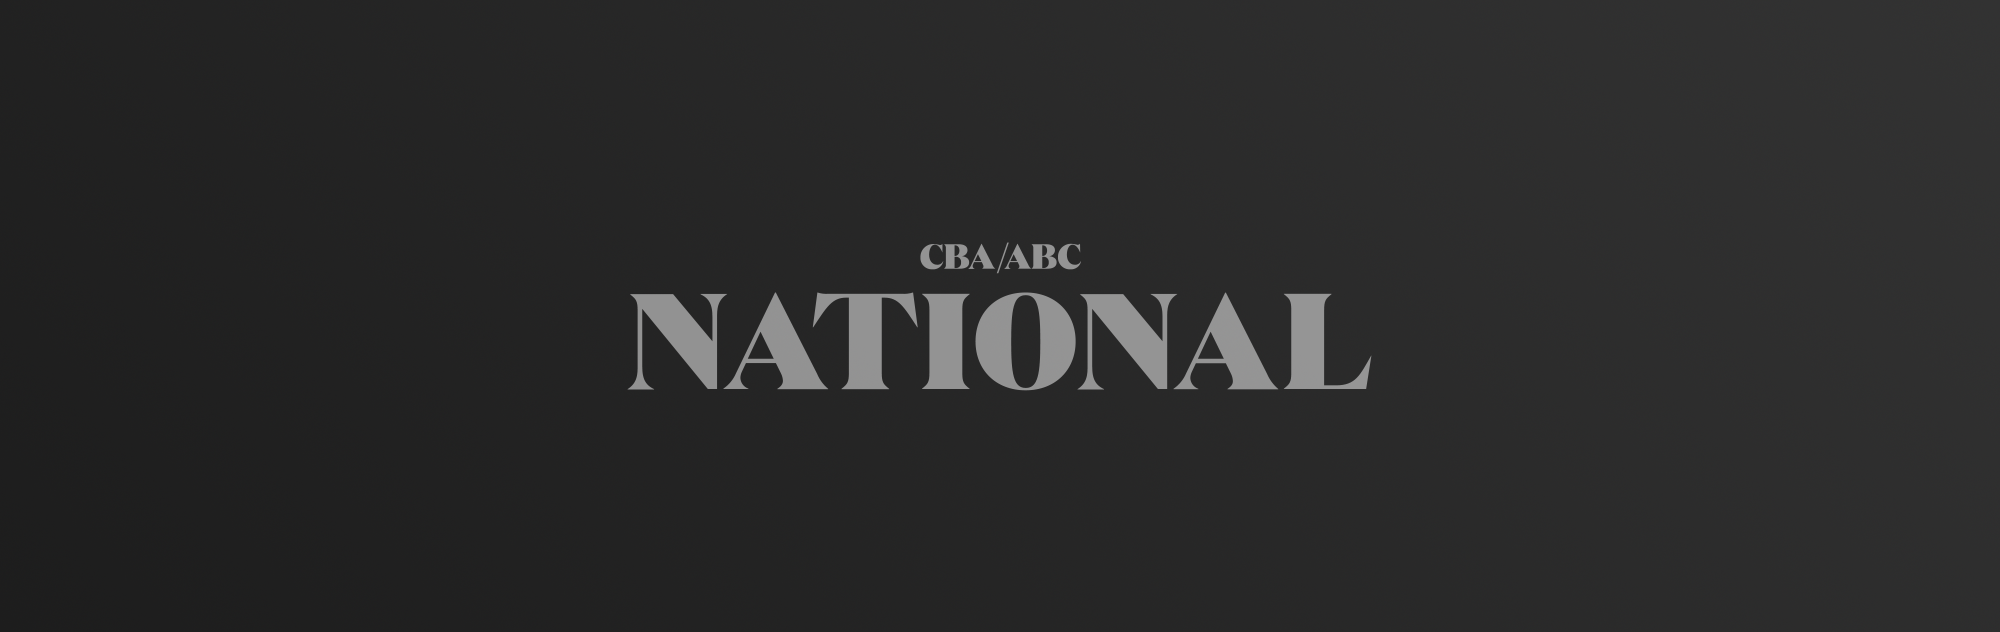 CBA/ABC National logo on dark gradient background